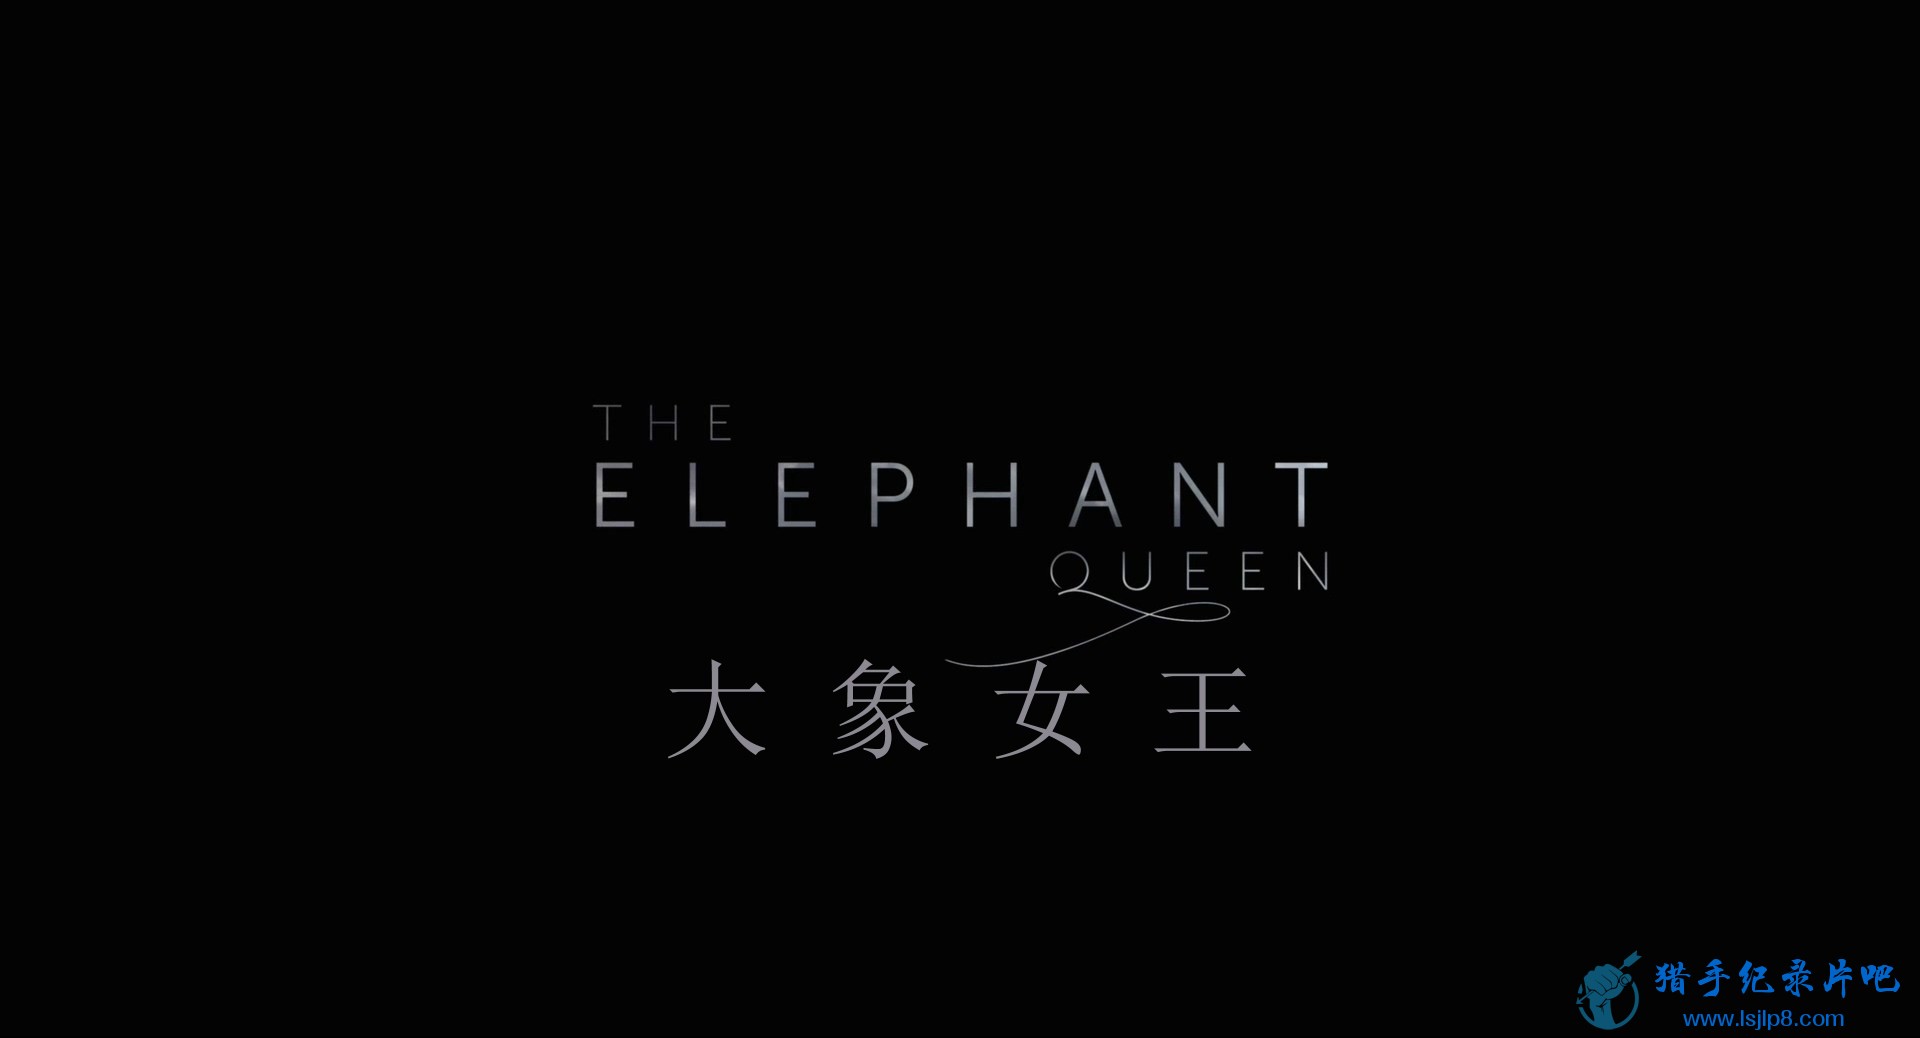 The.Elephant.Queen.2019.1080p.WEB-DL.DD5.1.H264-Tars[EtHD].mkv_20200219_134223.659.jpg